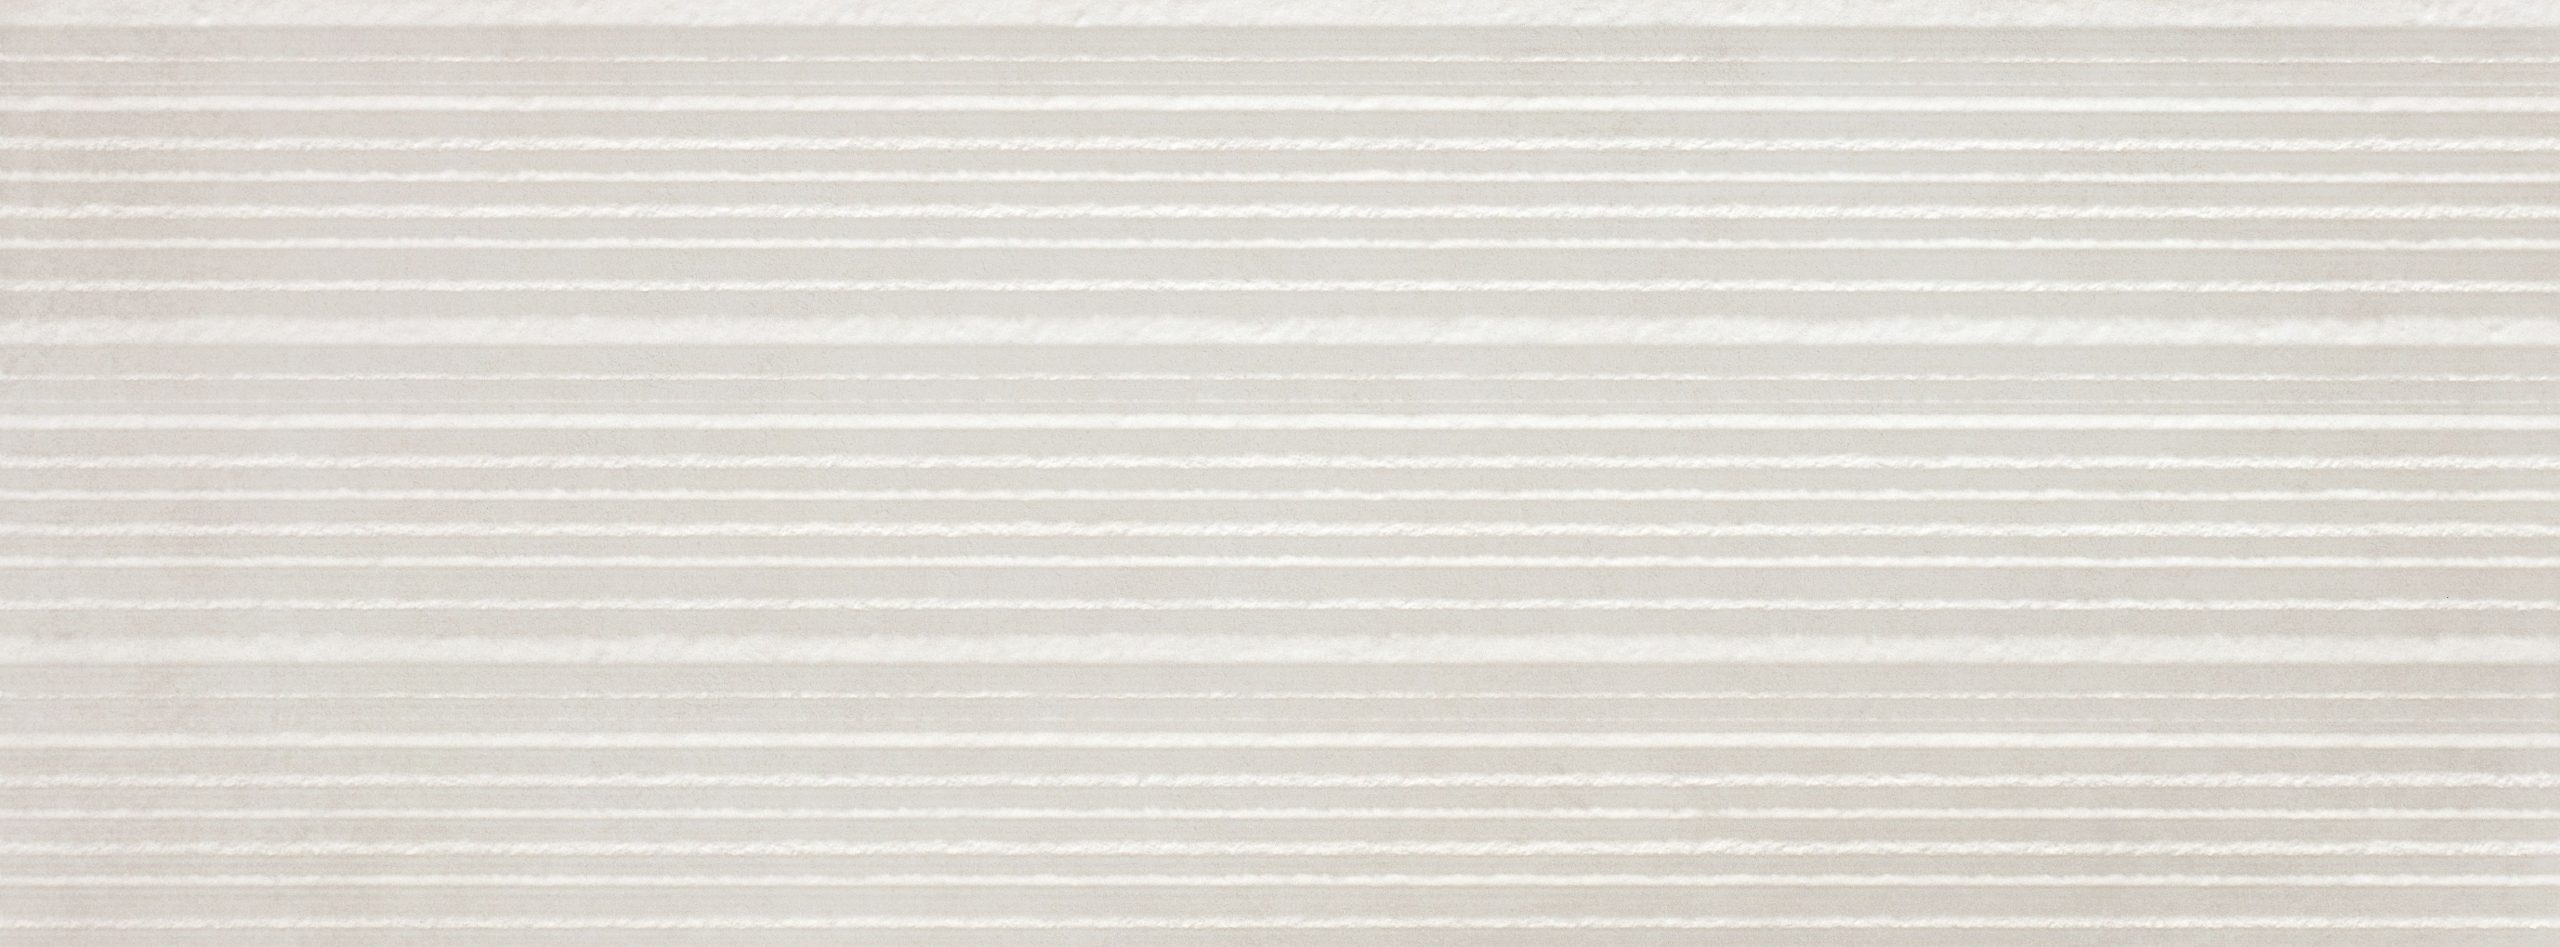 lecco 33.9x90cm pasta blanca azulejo revestimiento pared